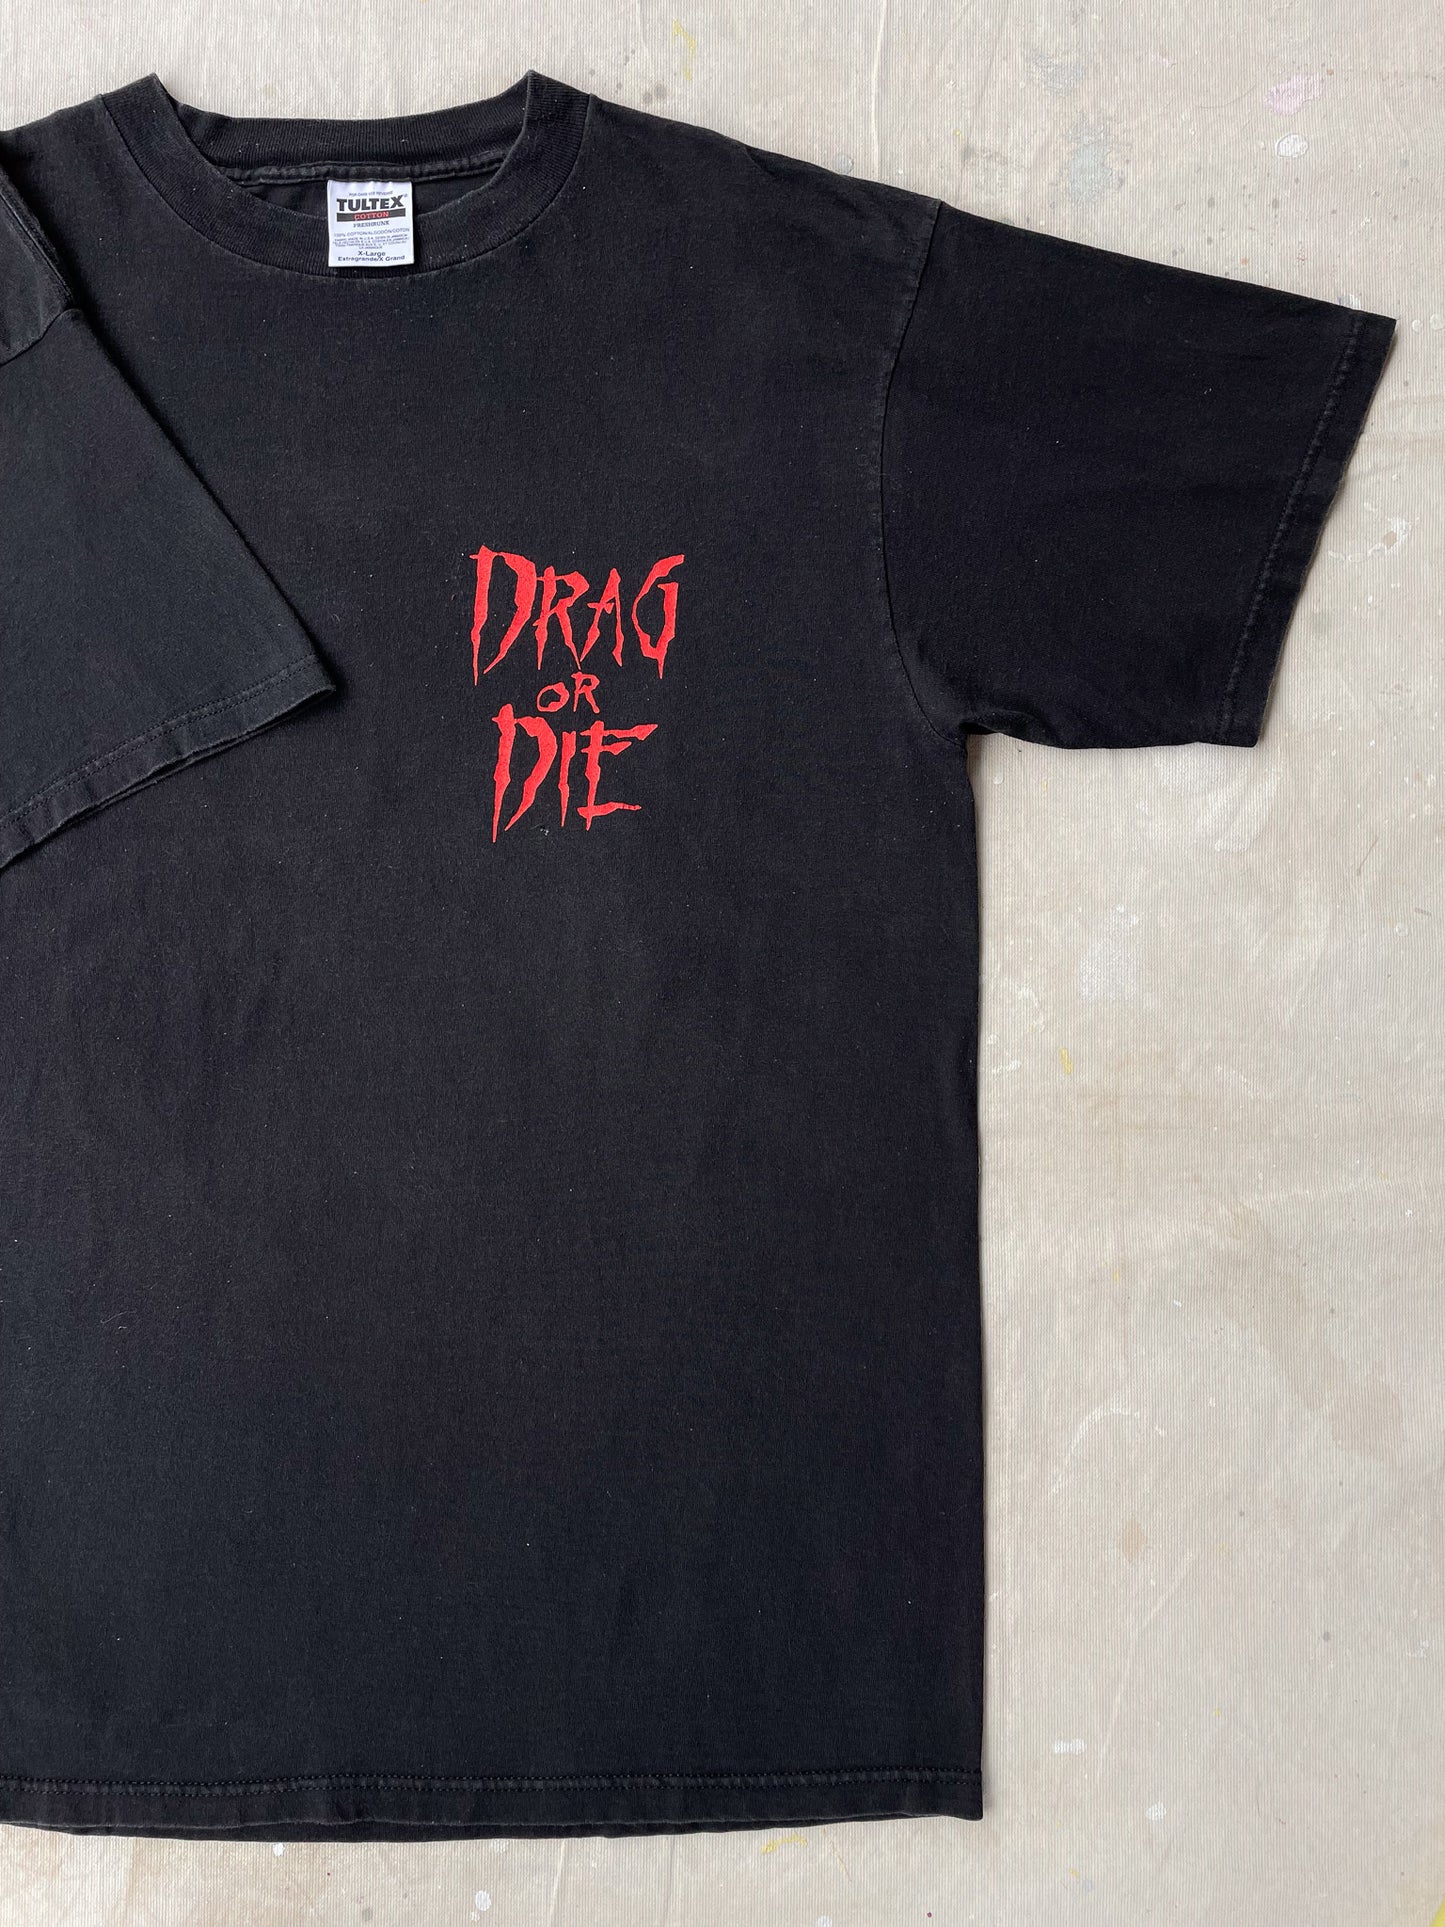 Drag or Die T-Shirt—[XL]